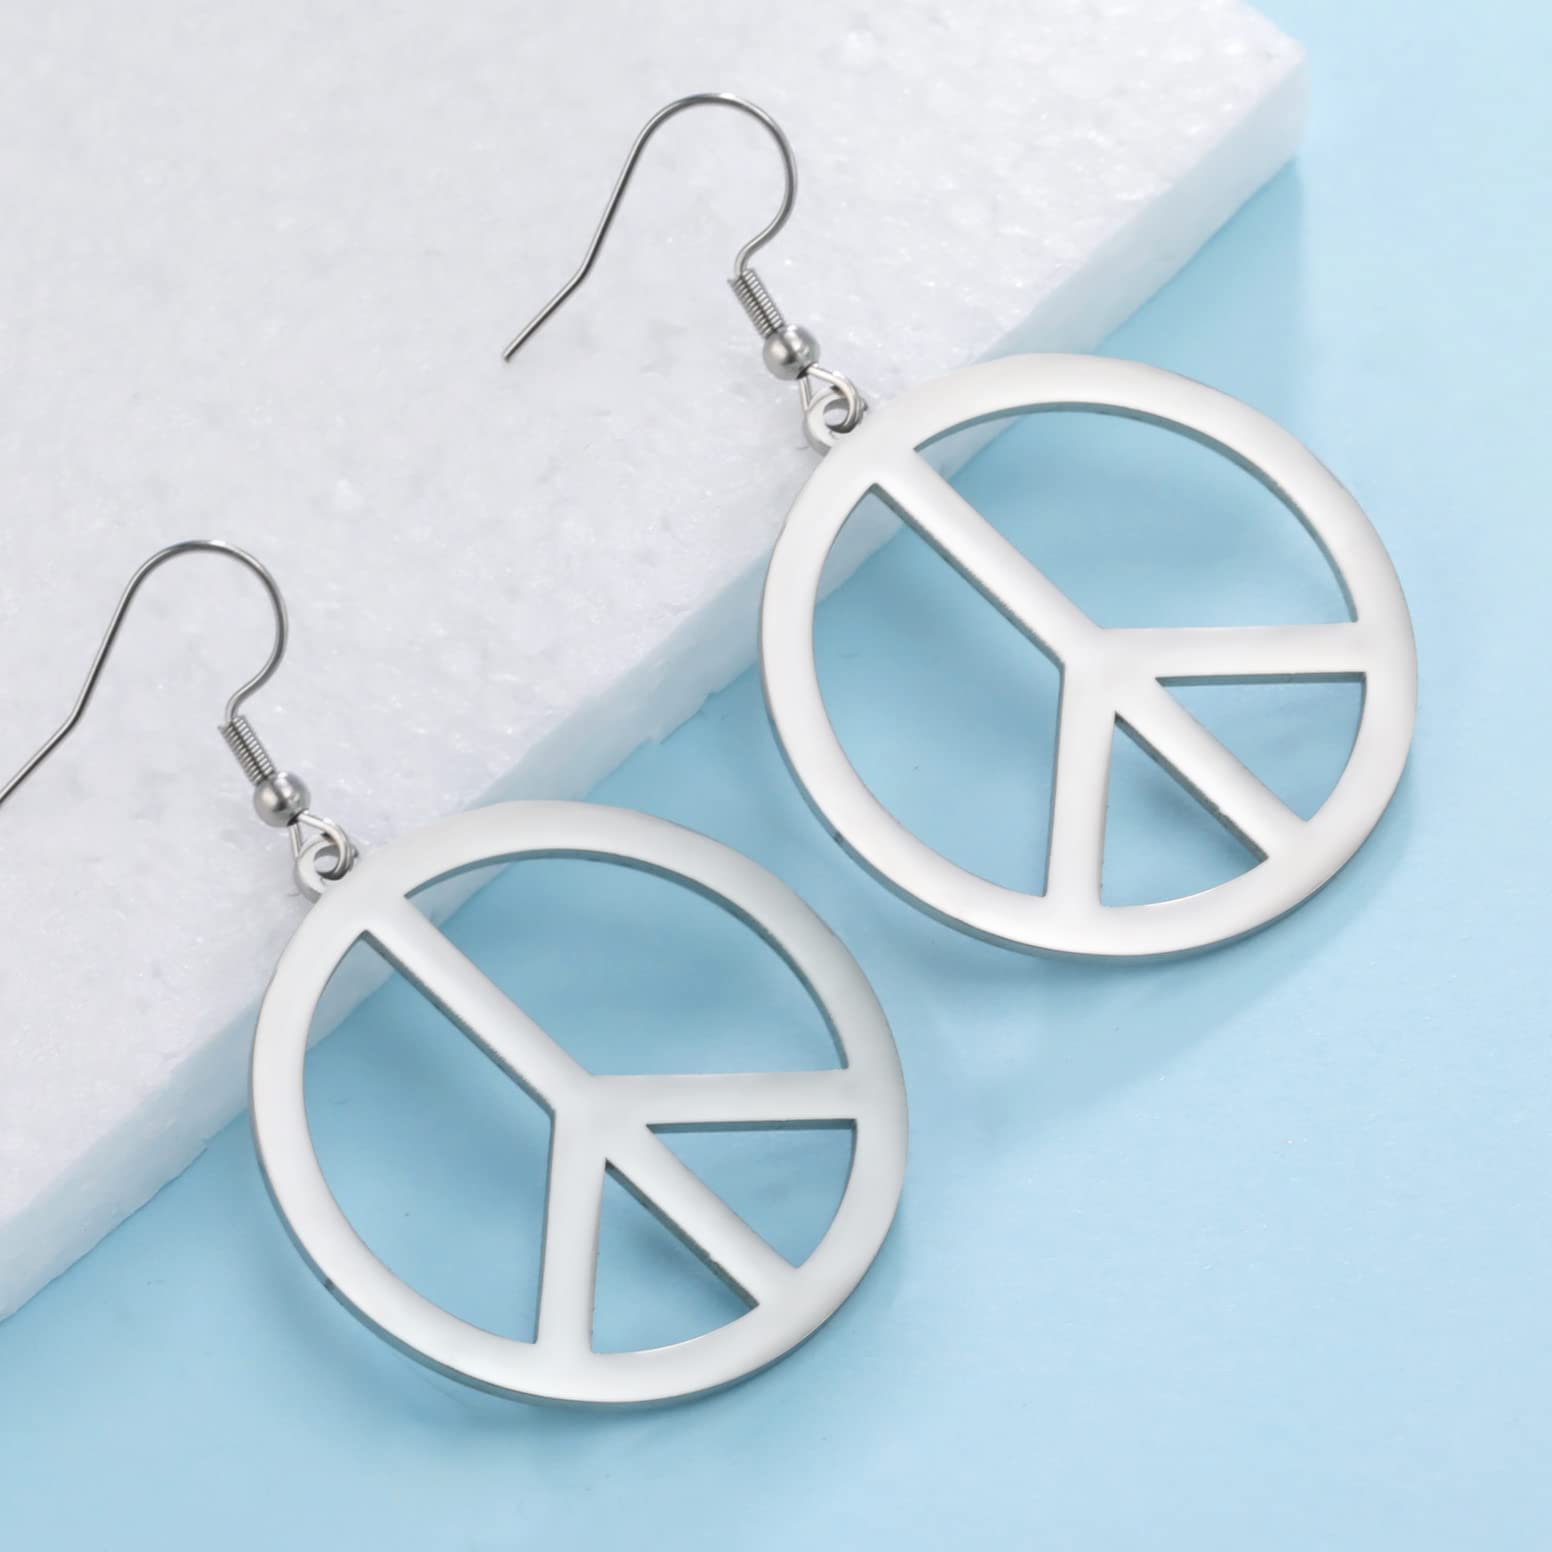 Peace Sign Symbol Earrings Geometric Large Round Statement Earrings Hippie Studs Jewelry Accessories Girls Women